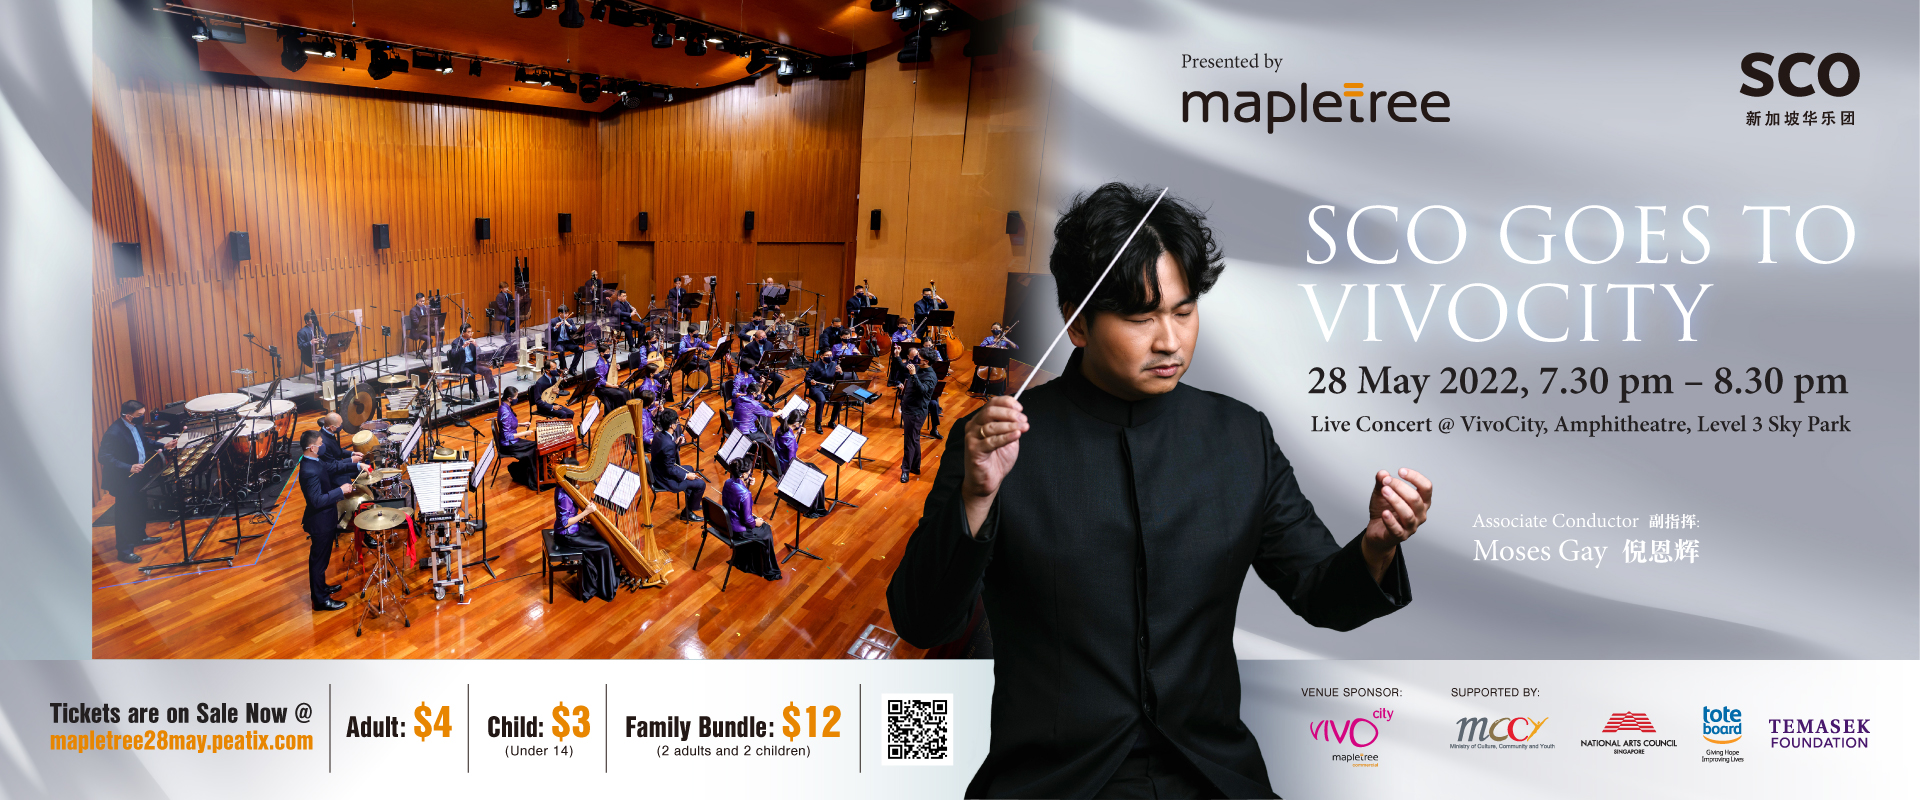 SCO_Mapletree_Concert_1920x800_3 Singapore Chinese Orchestra 新加坡华乐团